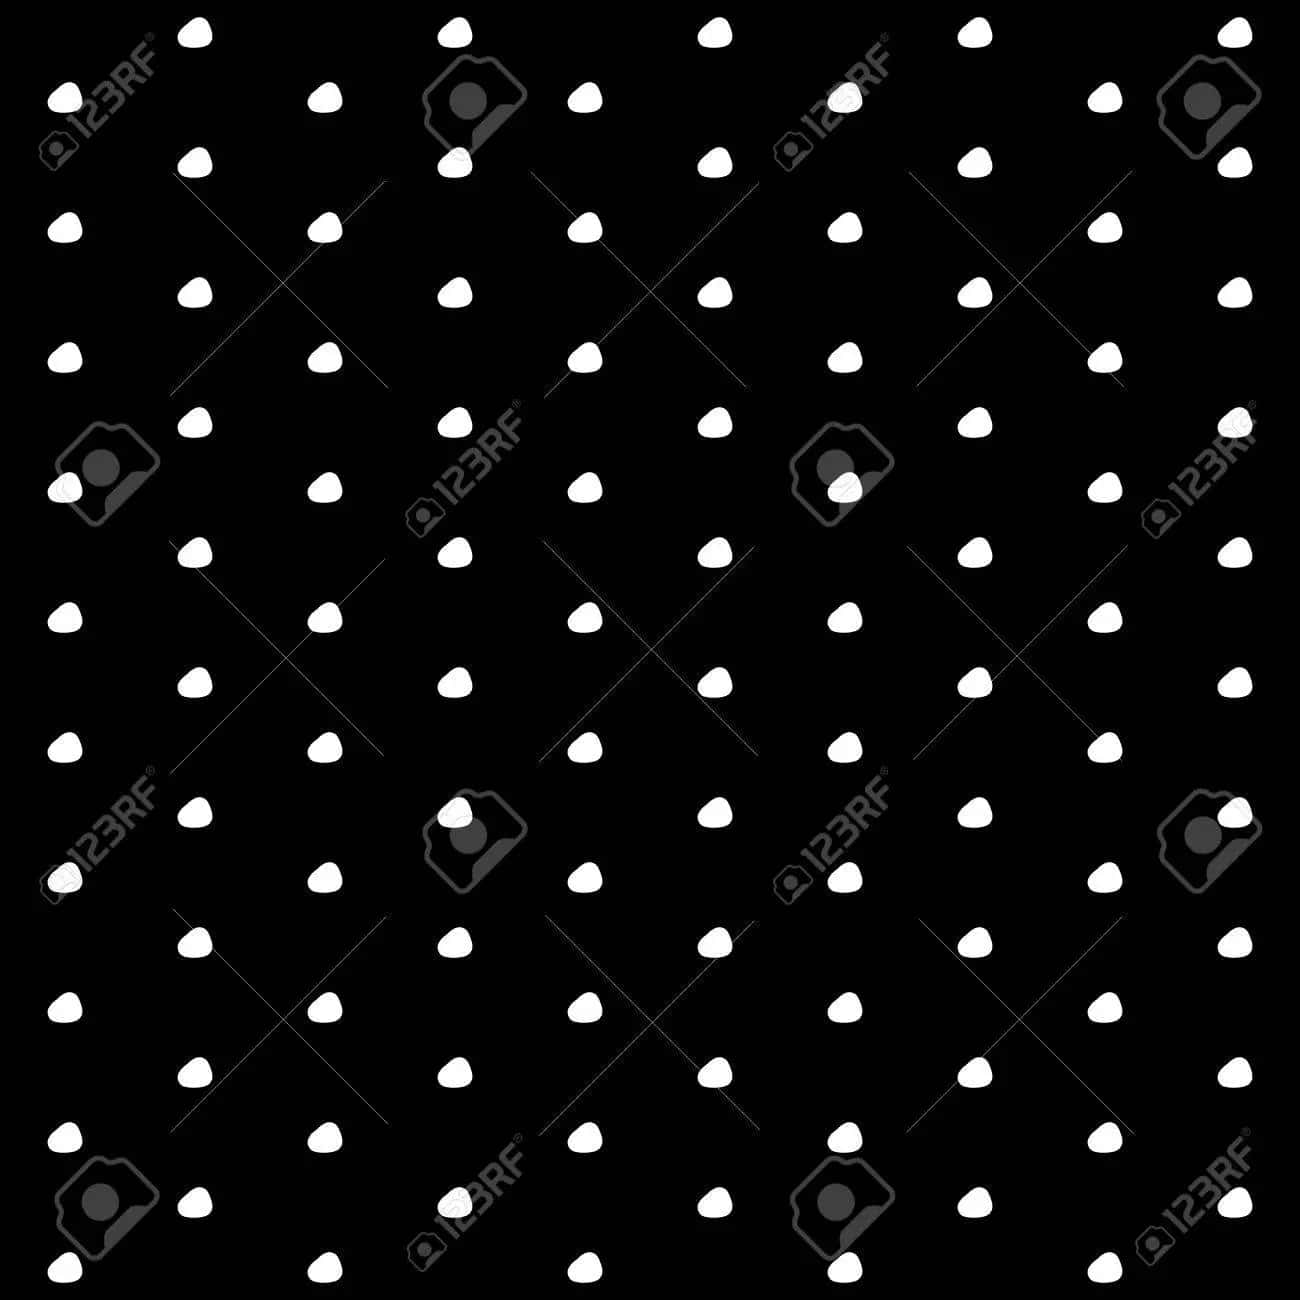 White Dots On Black Background Stock Vector Wallpaper